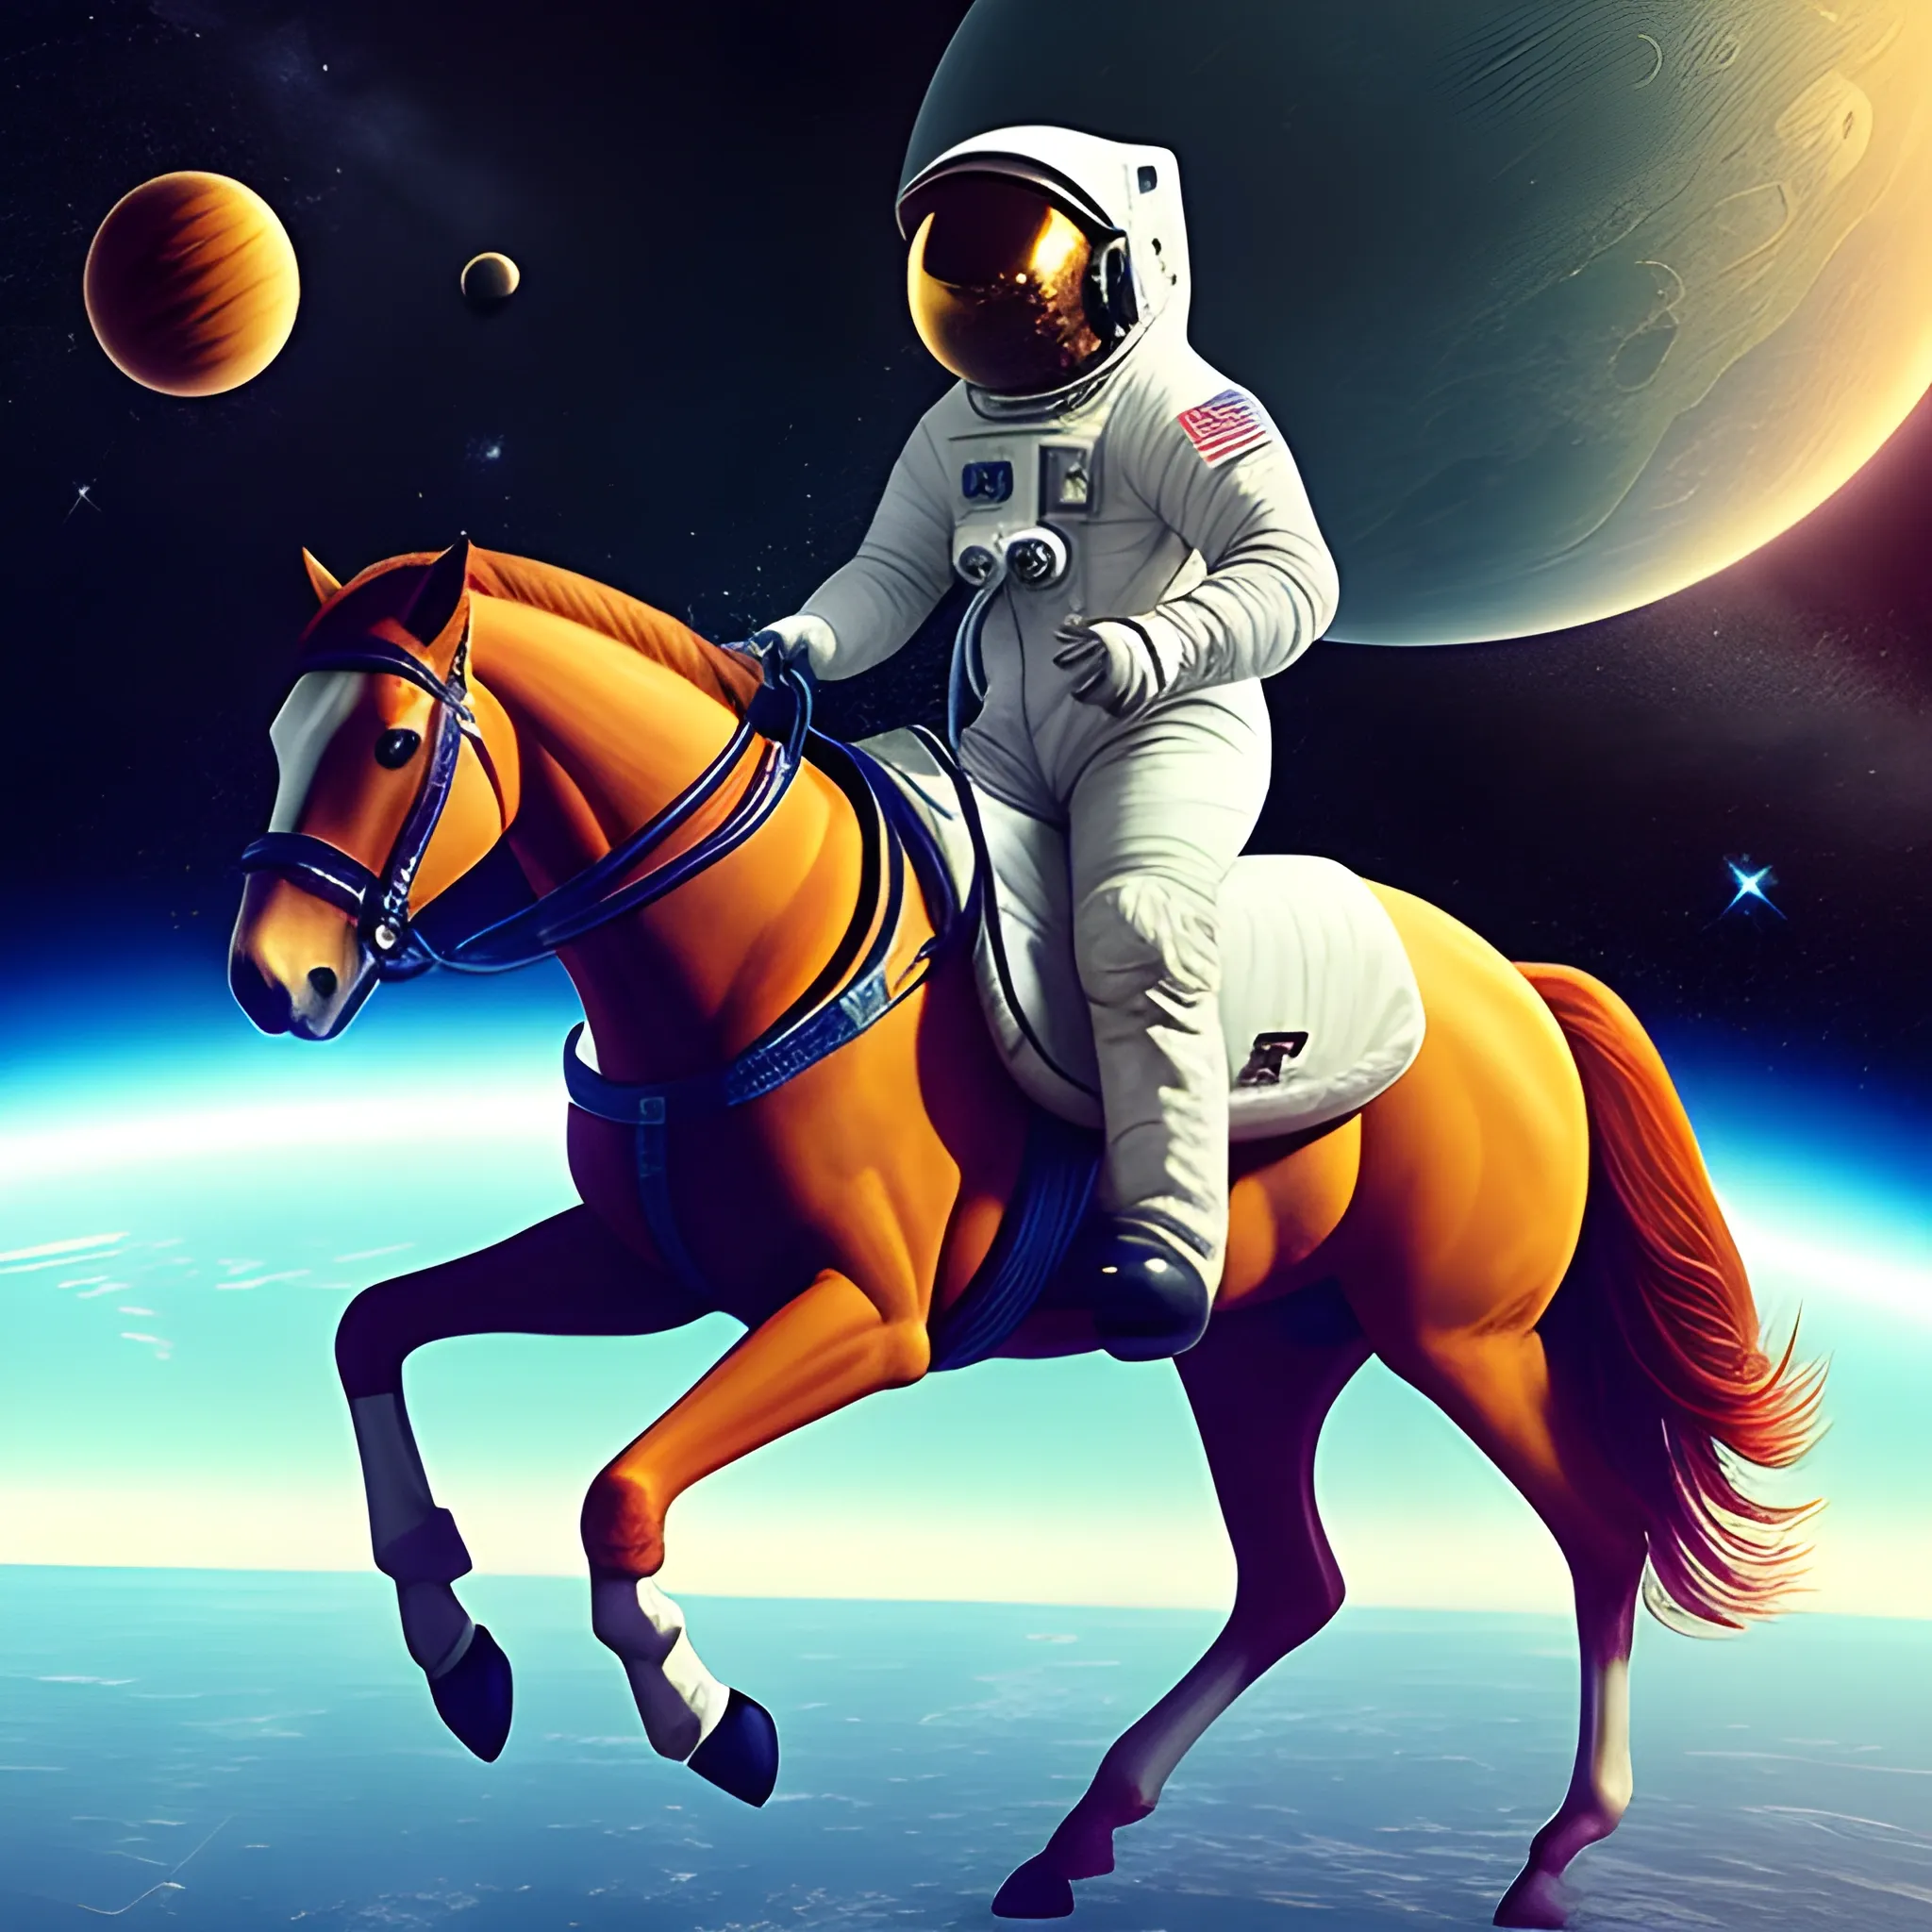 An astronaut riding a horse
